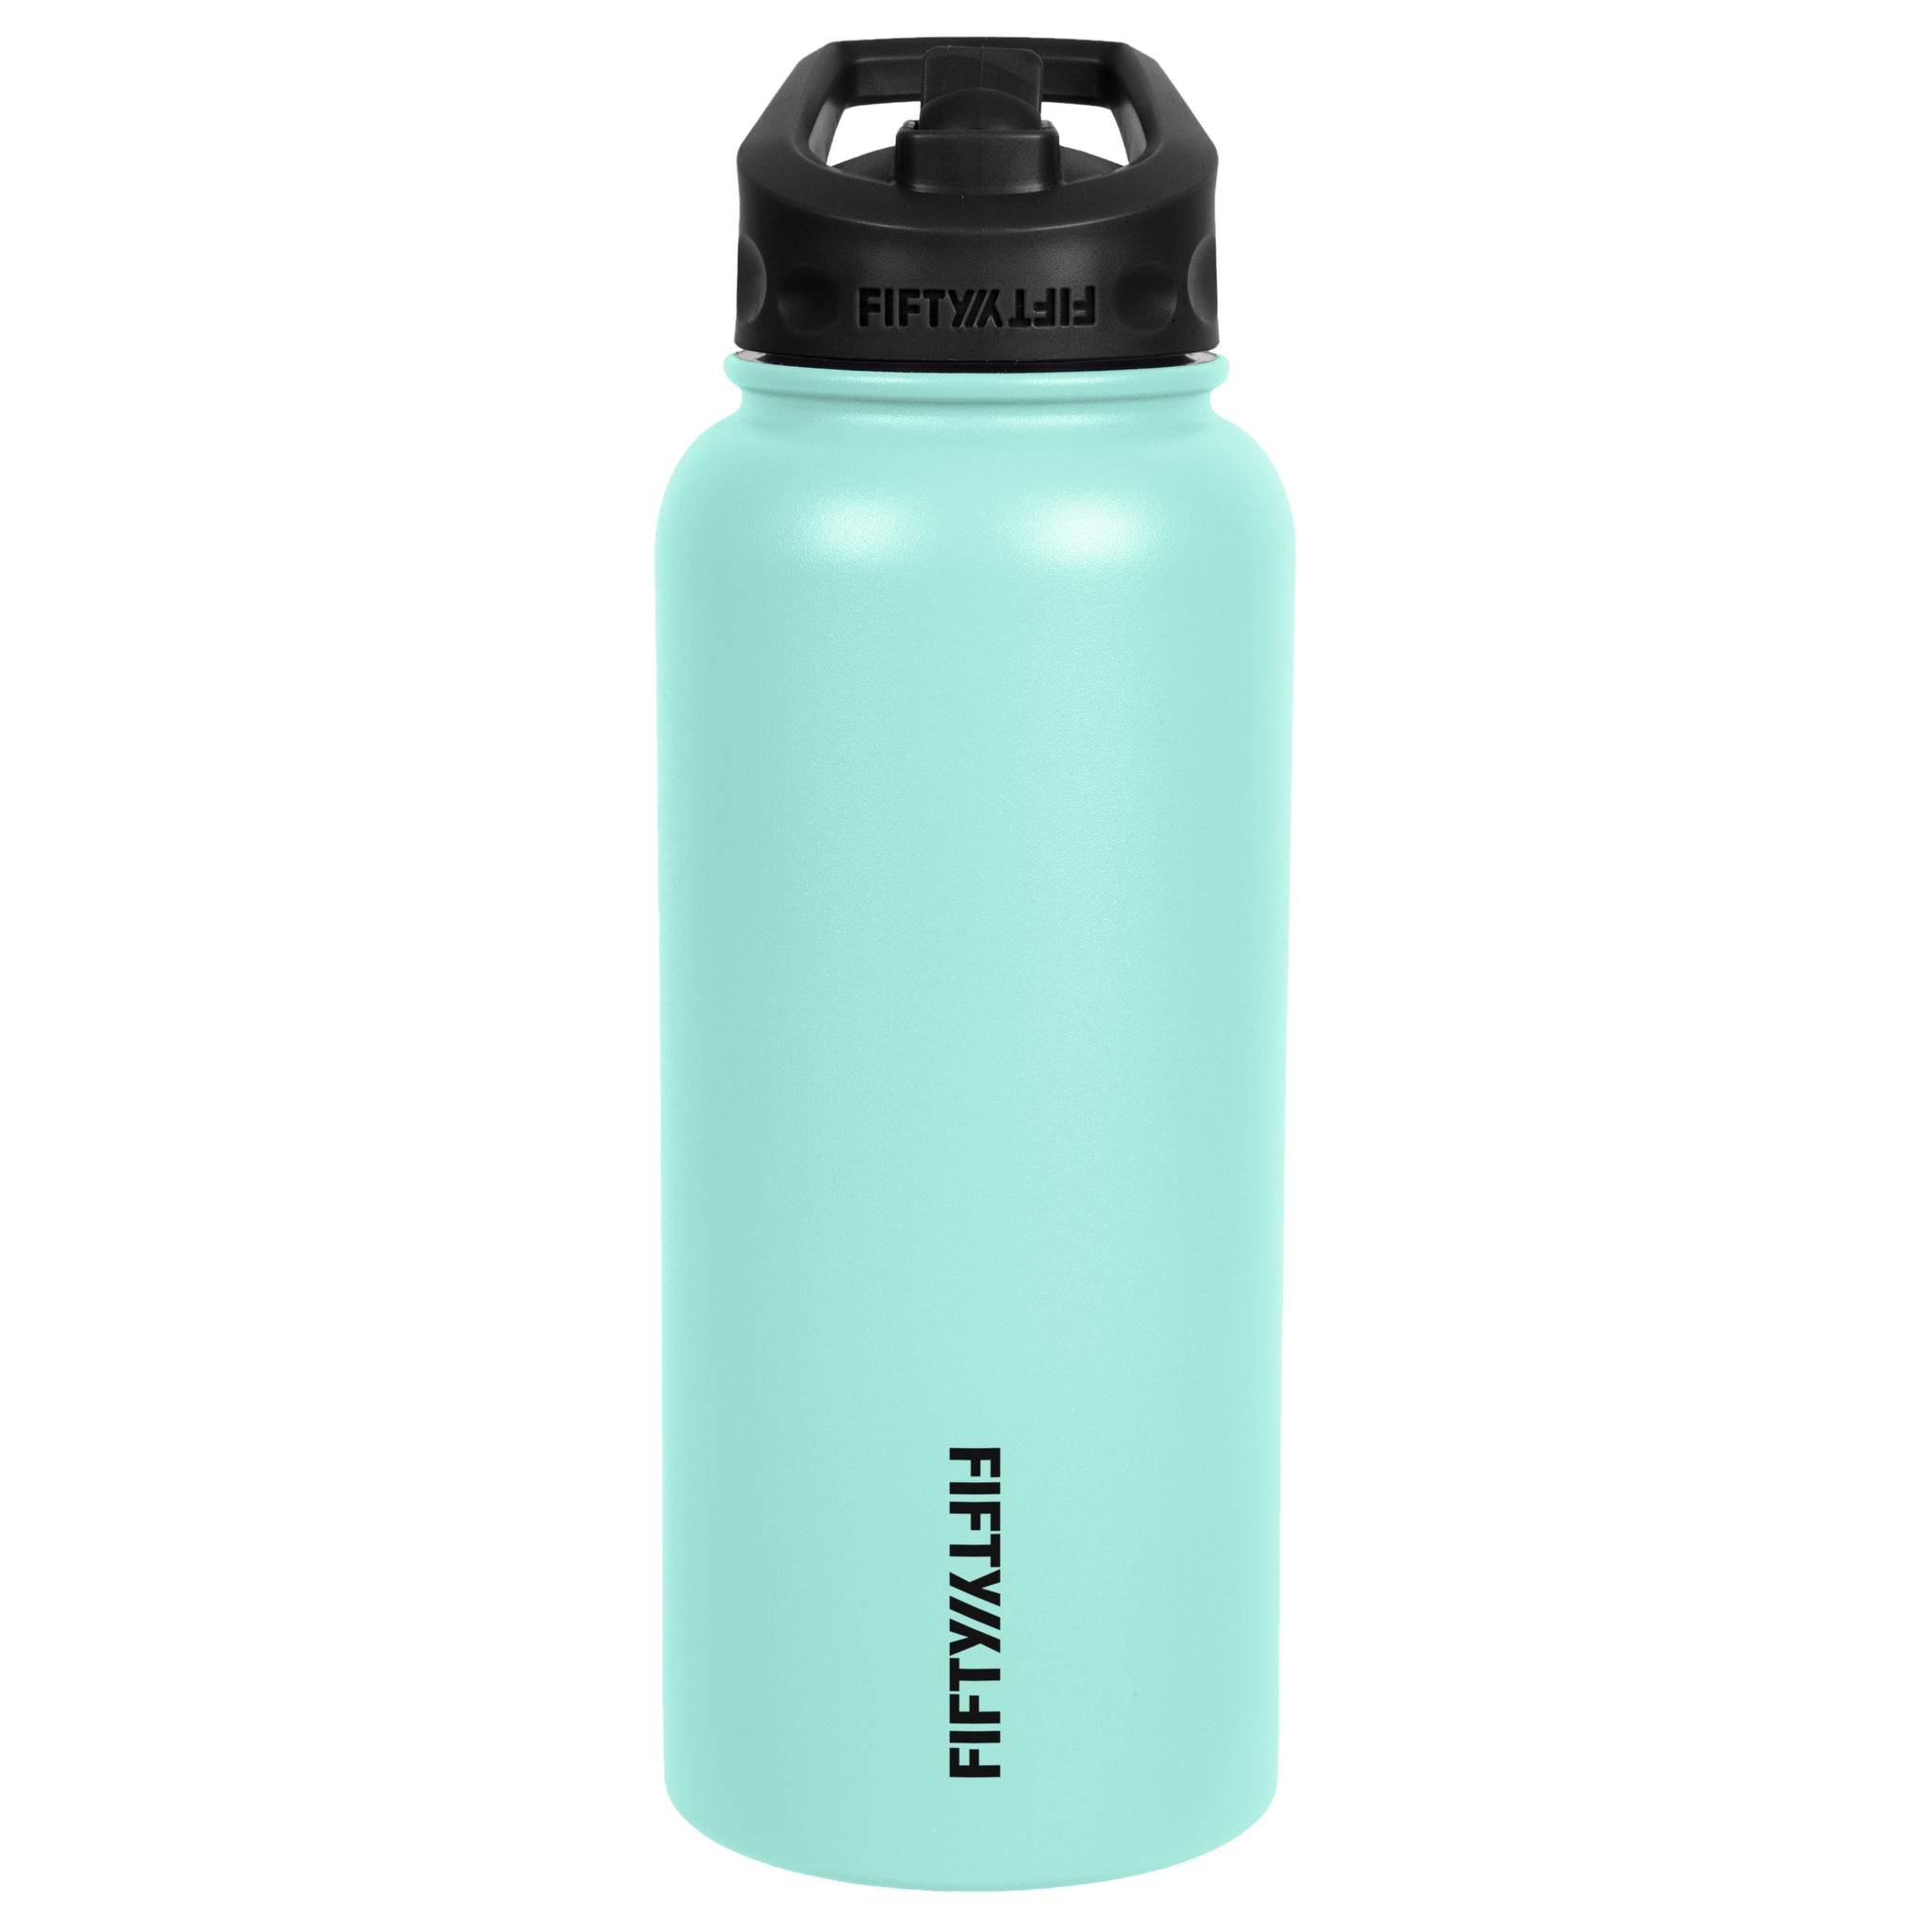 34 oz. Scottsboro Plastic Sports Water Bottle with Spout Lid